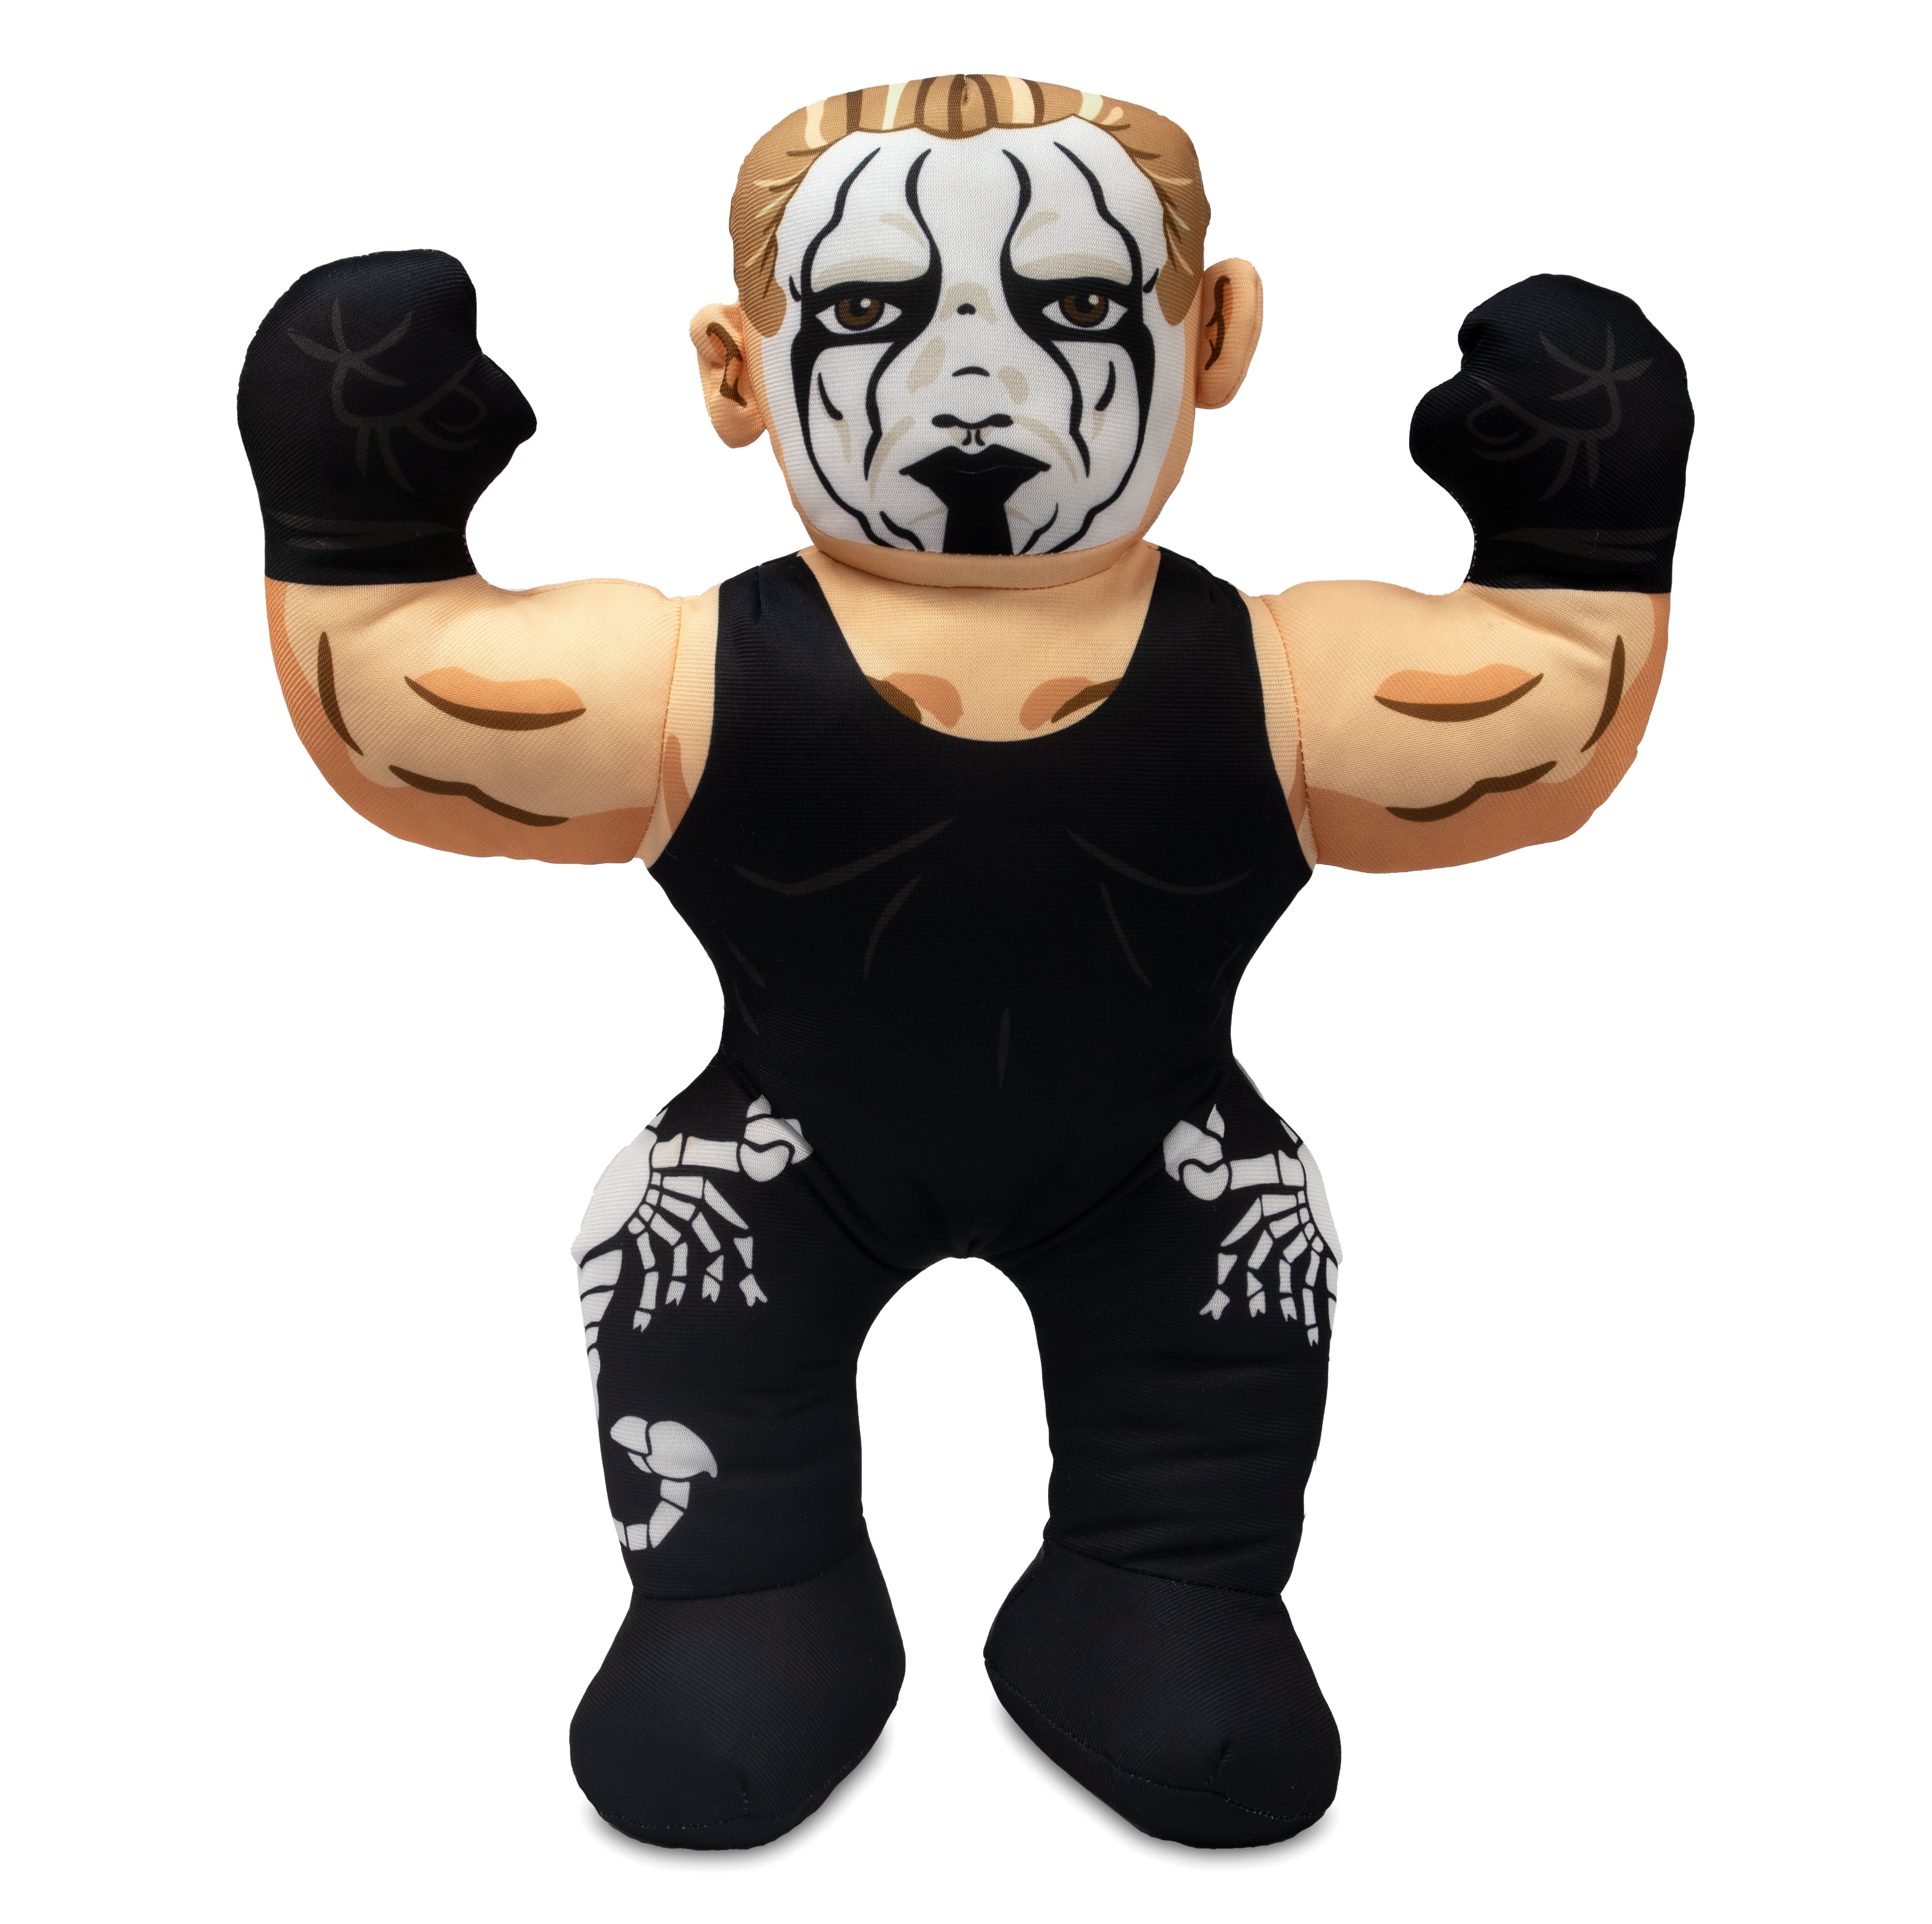 AEW 17" Sting Wrestling Buddies Stuffed Plush Interactive Toy